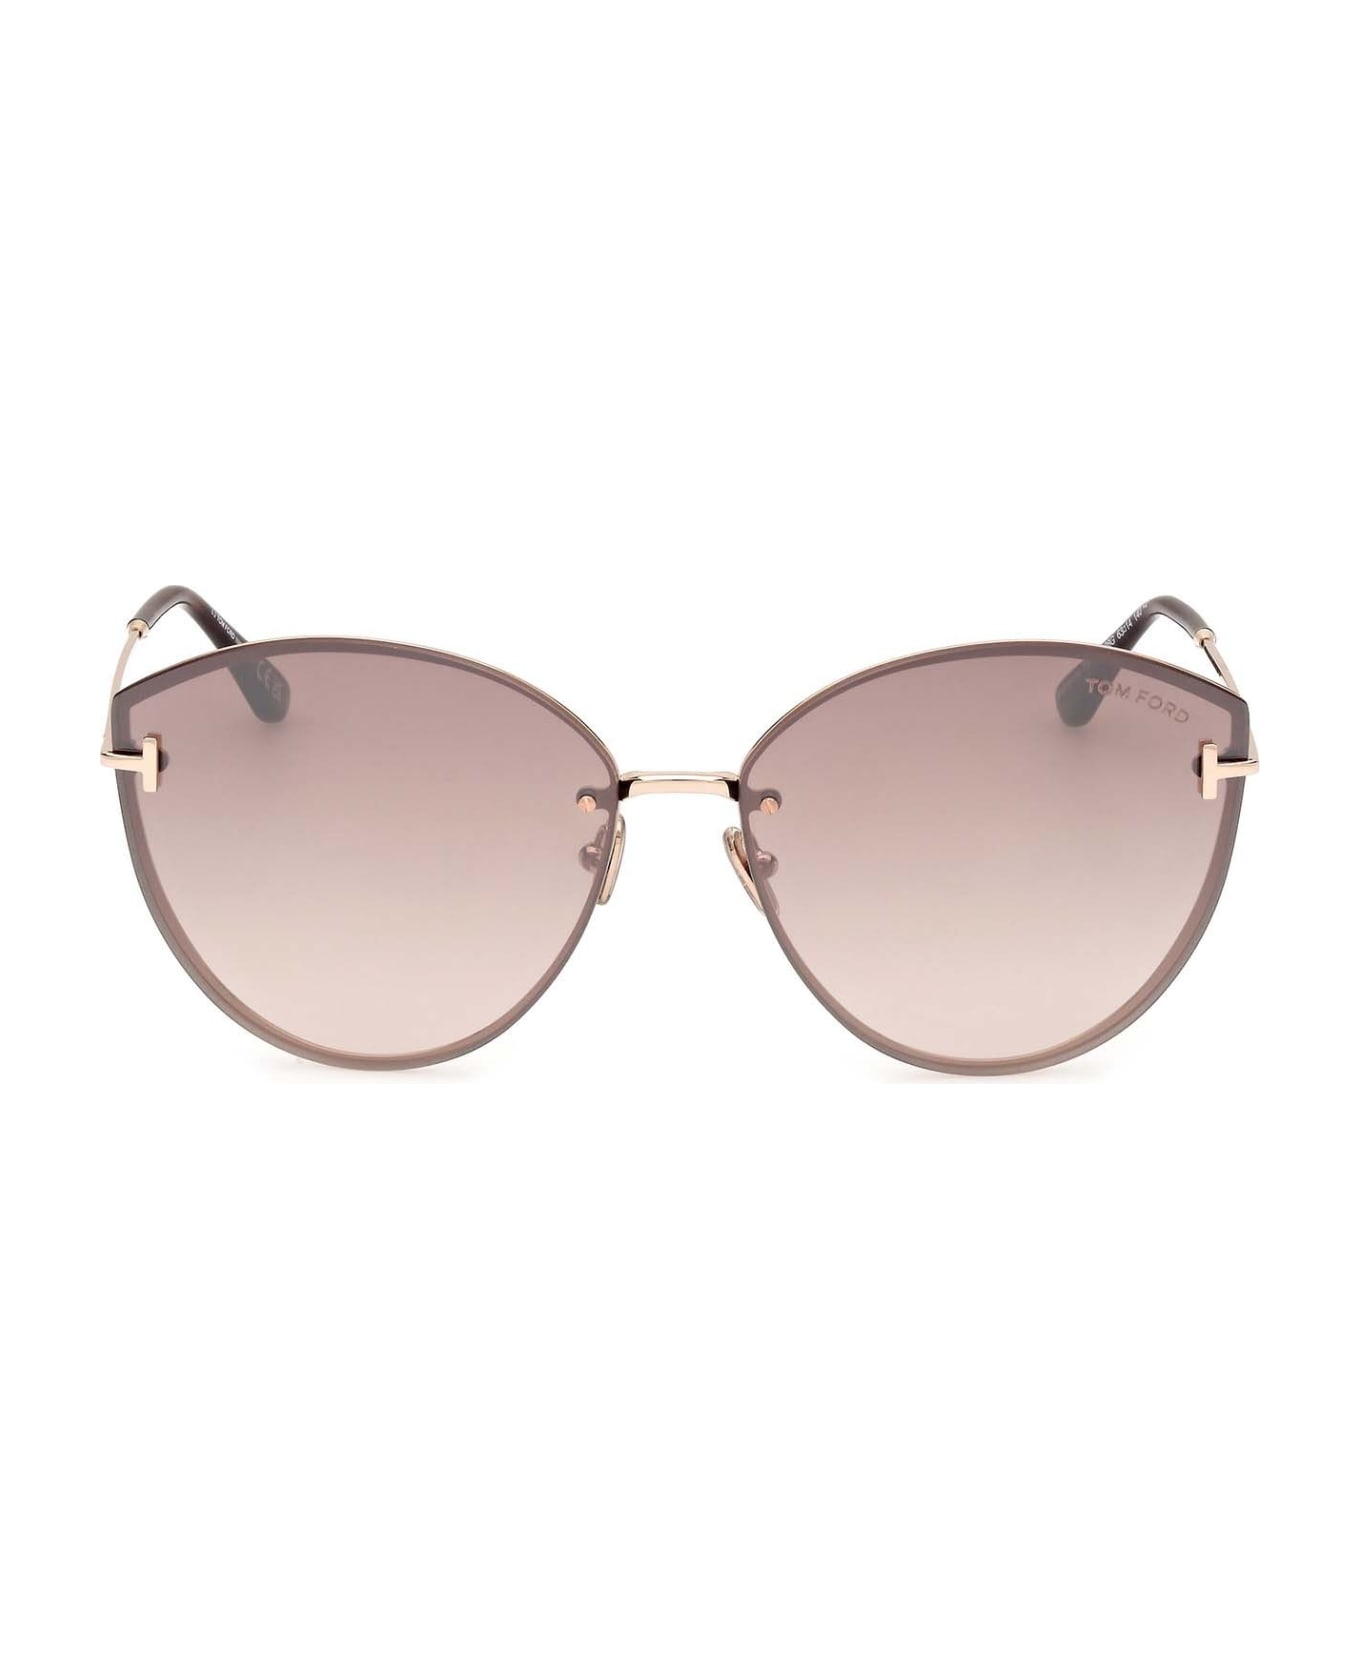 stylish sunglasses built for real life Sunglasses - Rosa/Rosa